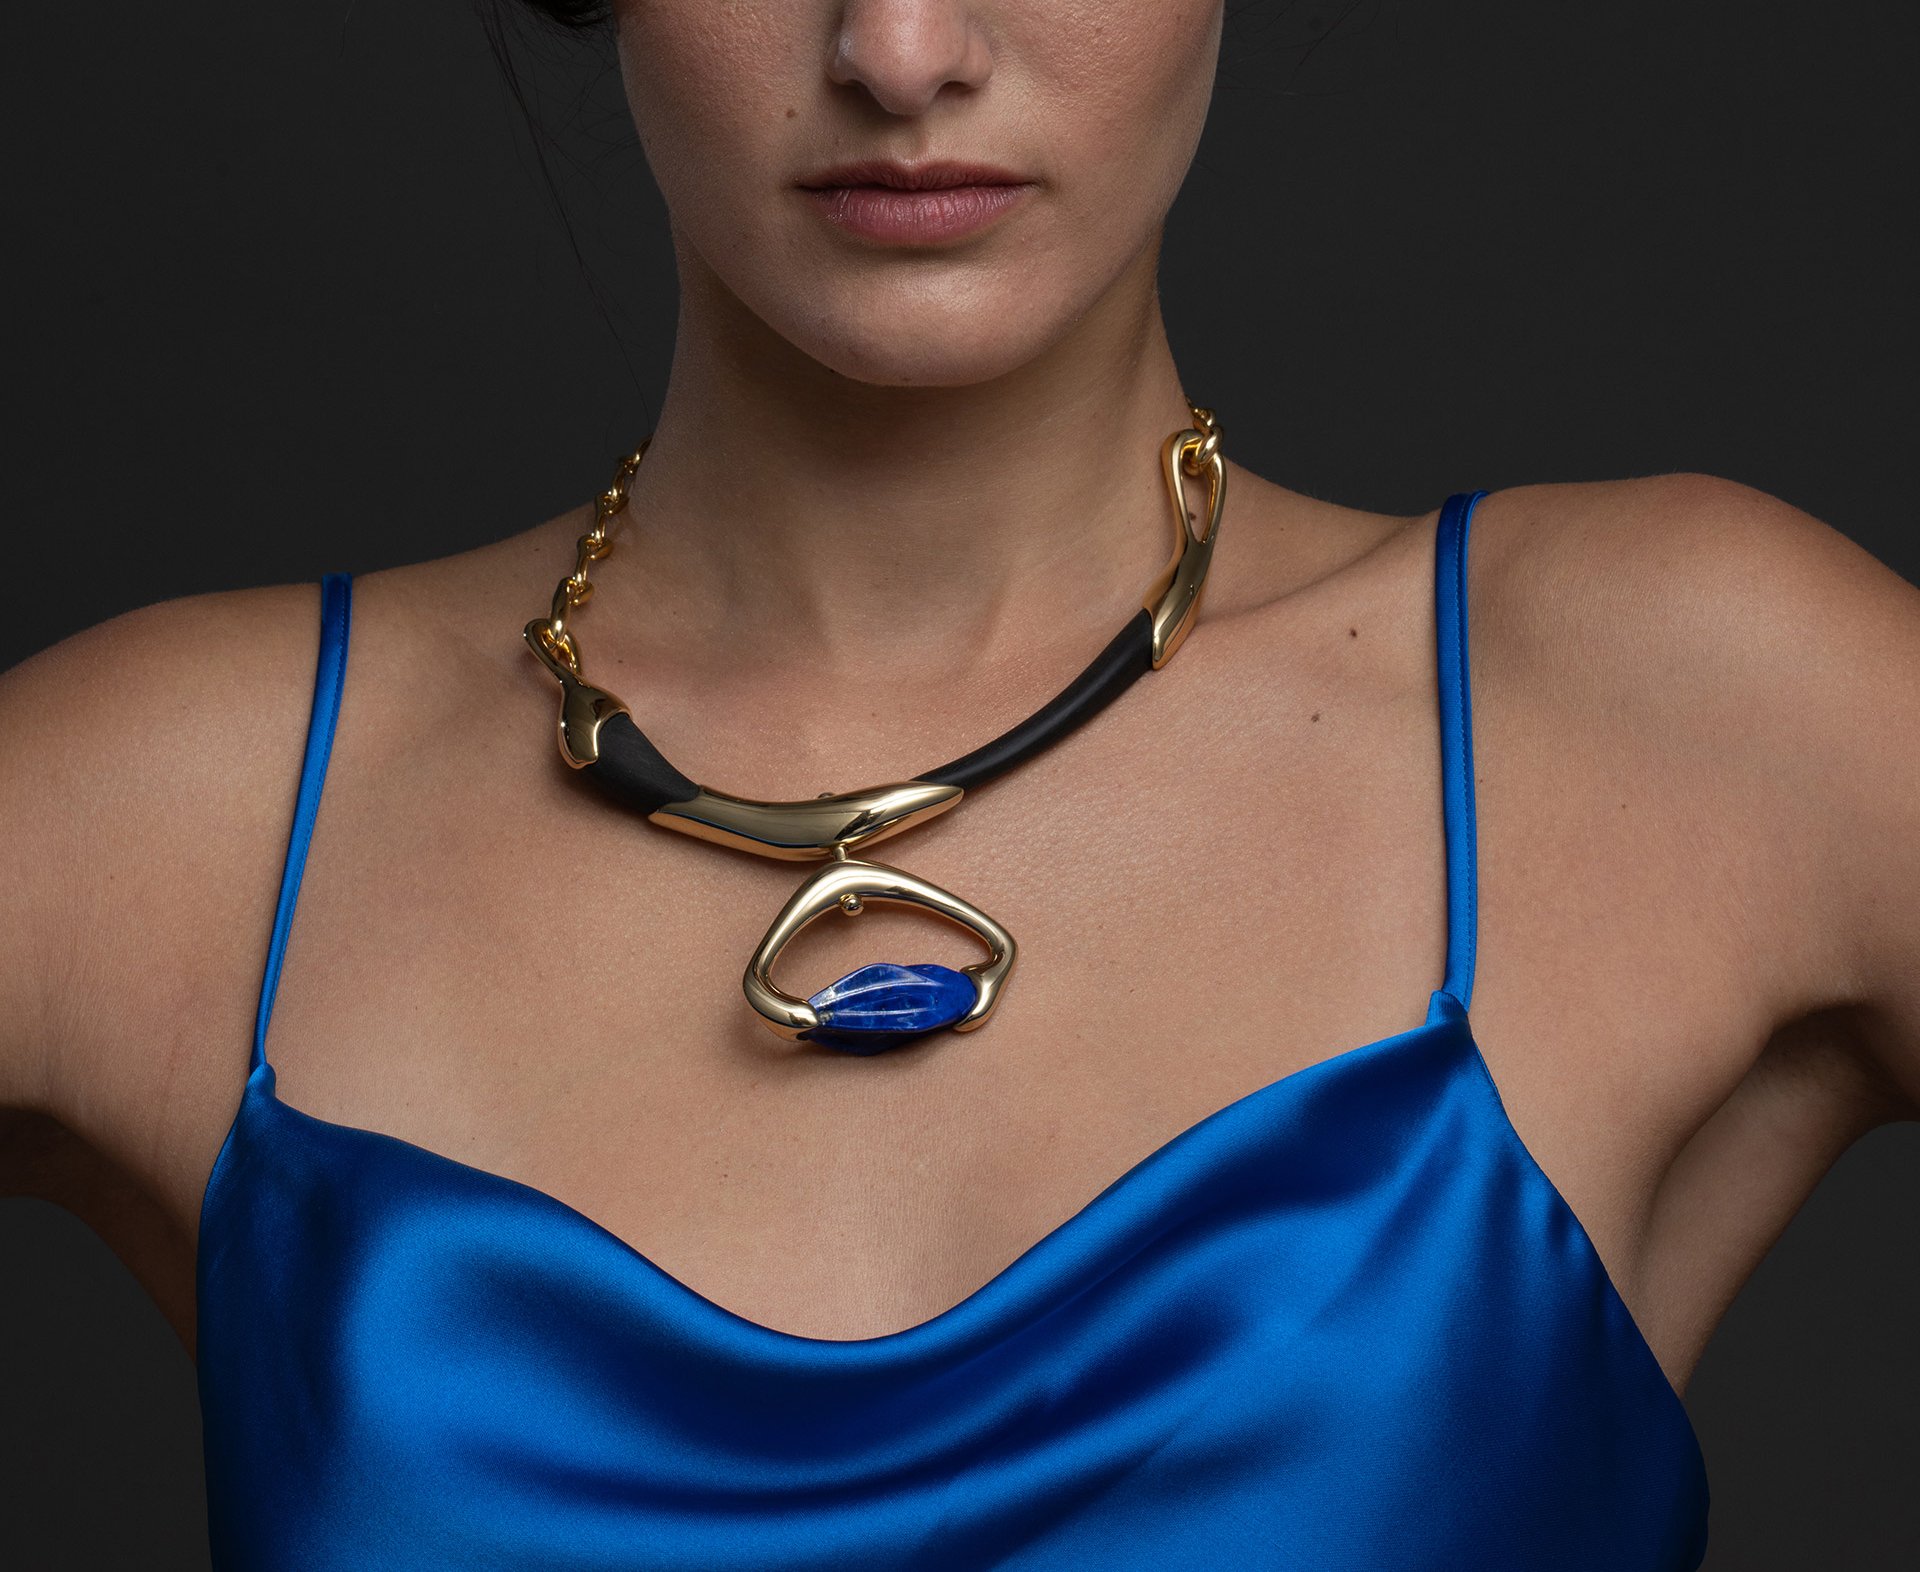 ANGLE-egypt-necklaces-collection-julio-martinez-barnetche-marion-friedmann-gallery-LR-egypt90-cut.jpg